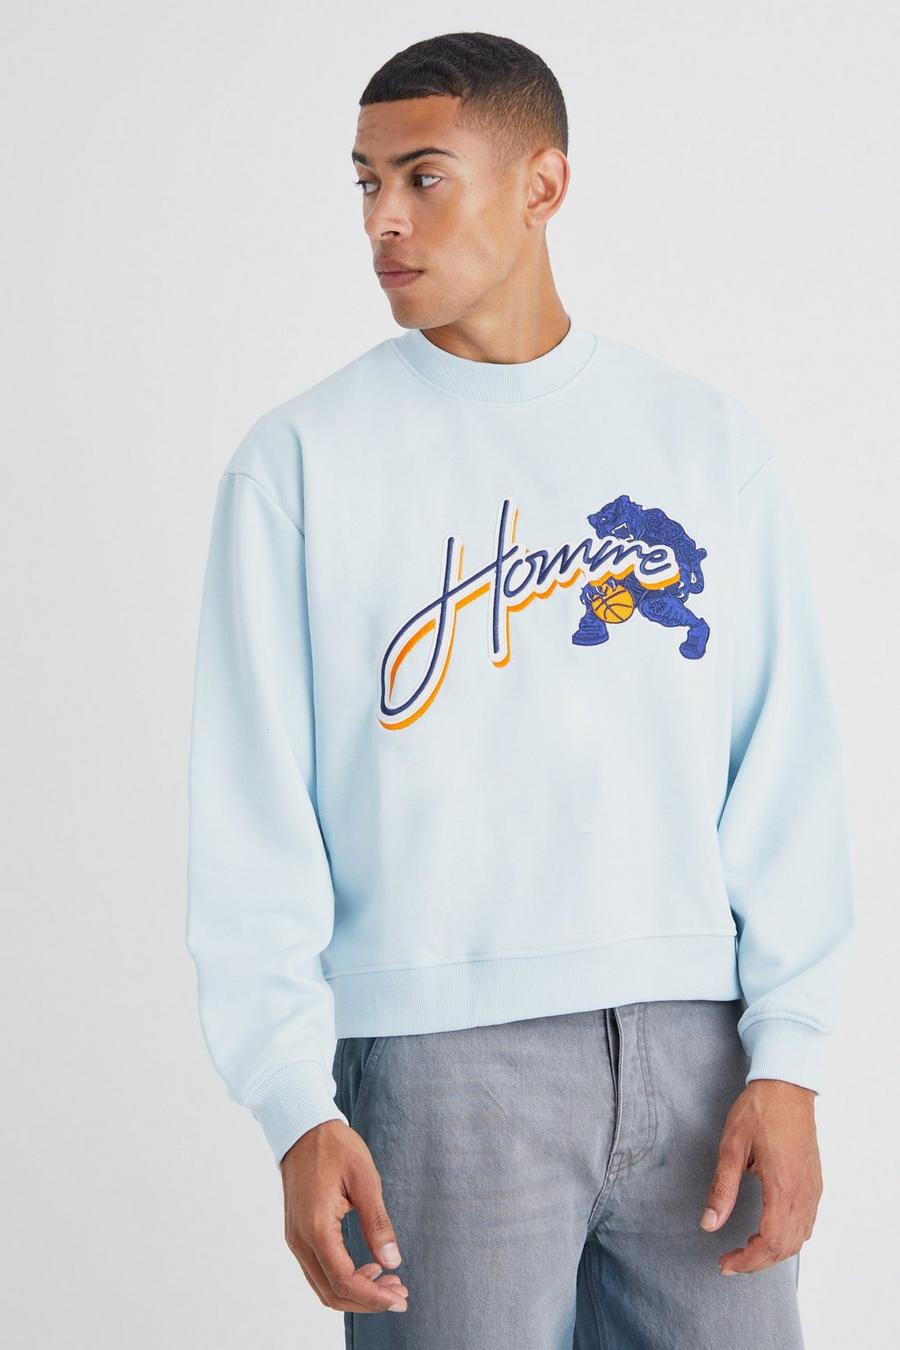 Kastiges Sweatshirt mit Homme-Applikation, Cloud blue